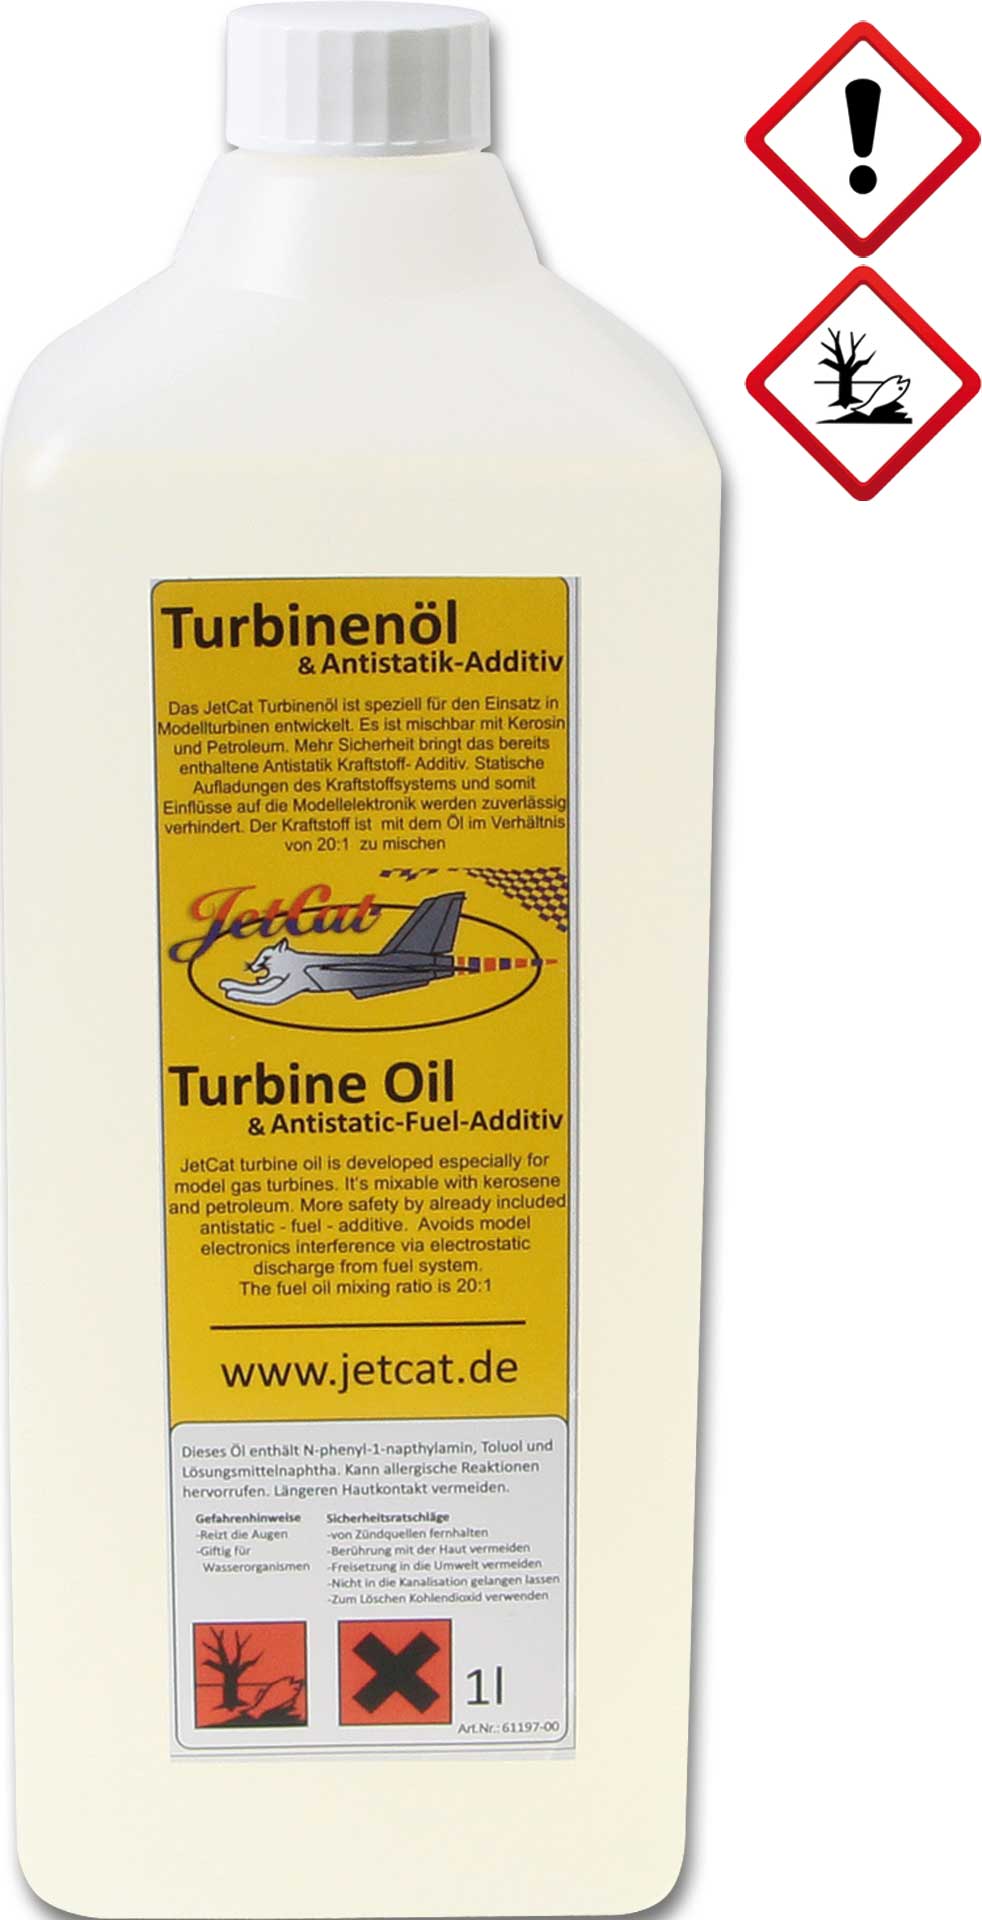 JETCAT TURBINE OIL 1 LITER INCLUDING ANTISTATIC ADDITIVE TURBINE OI